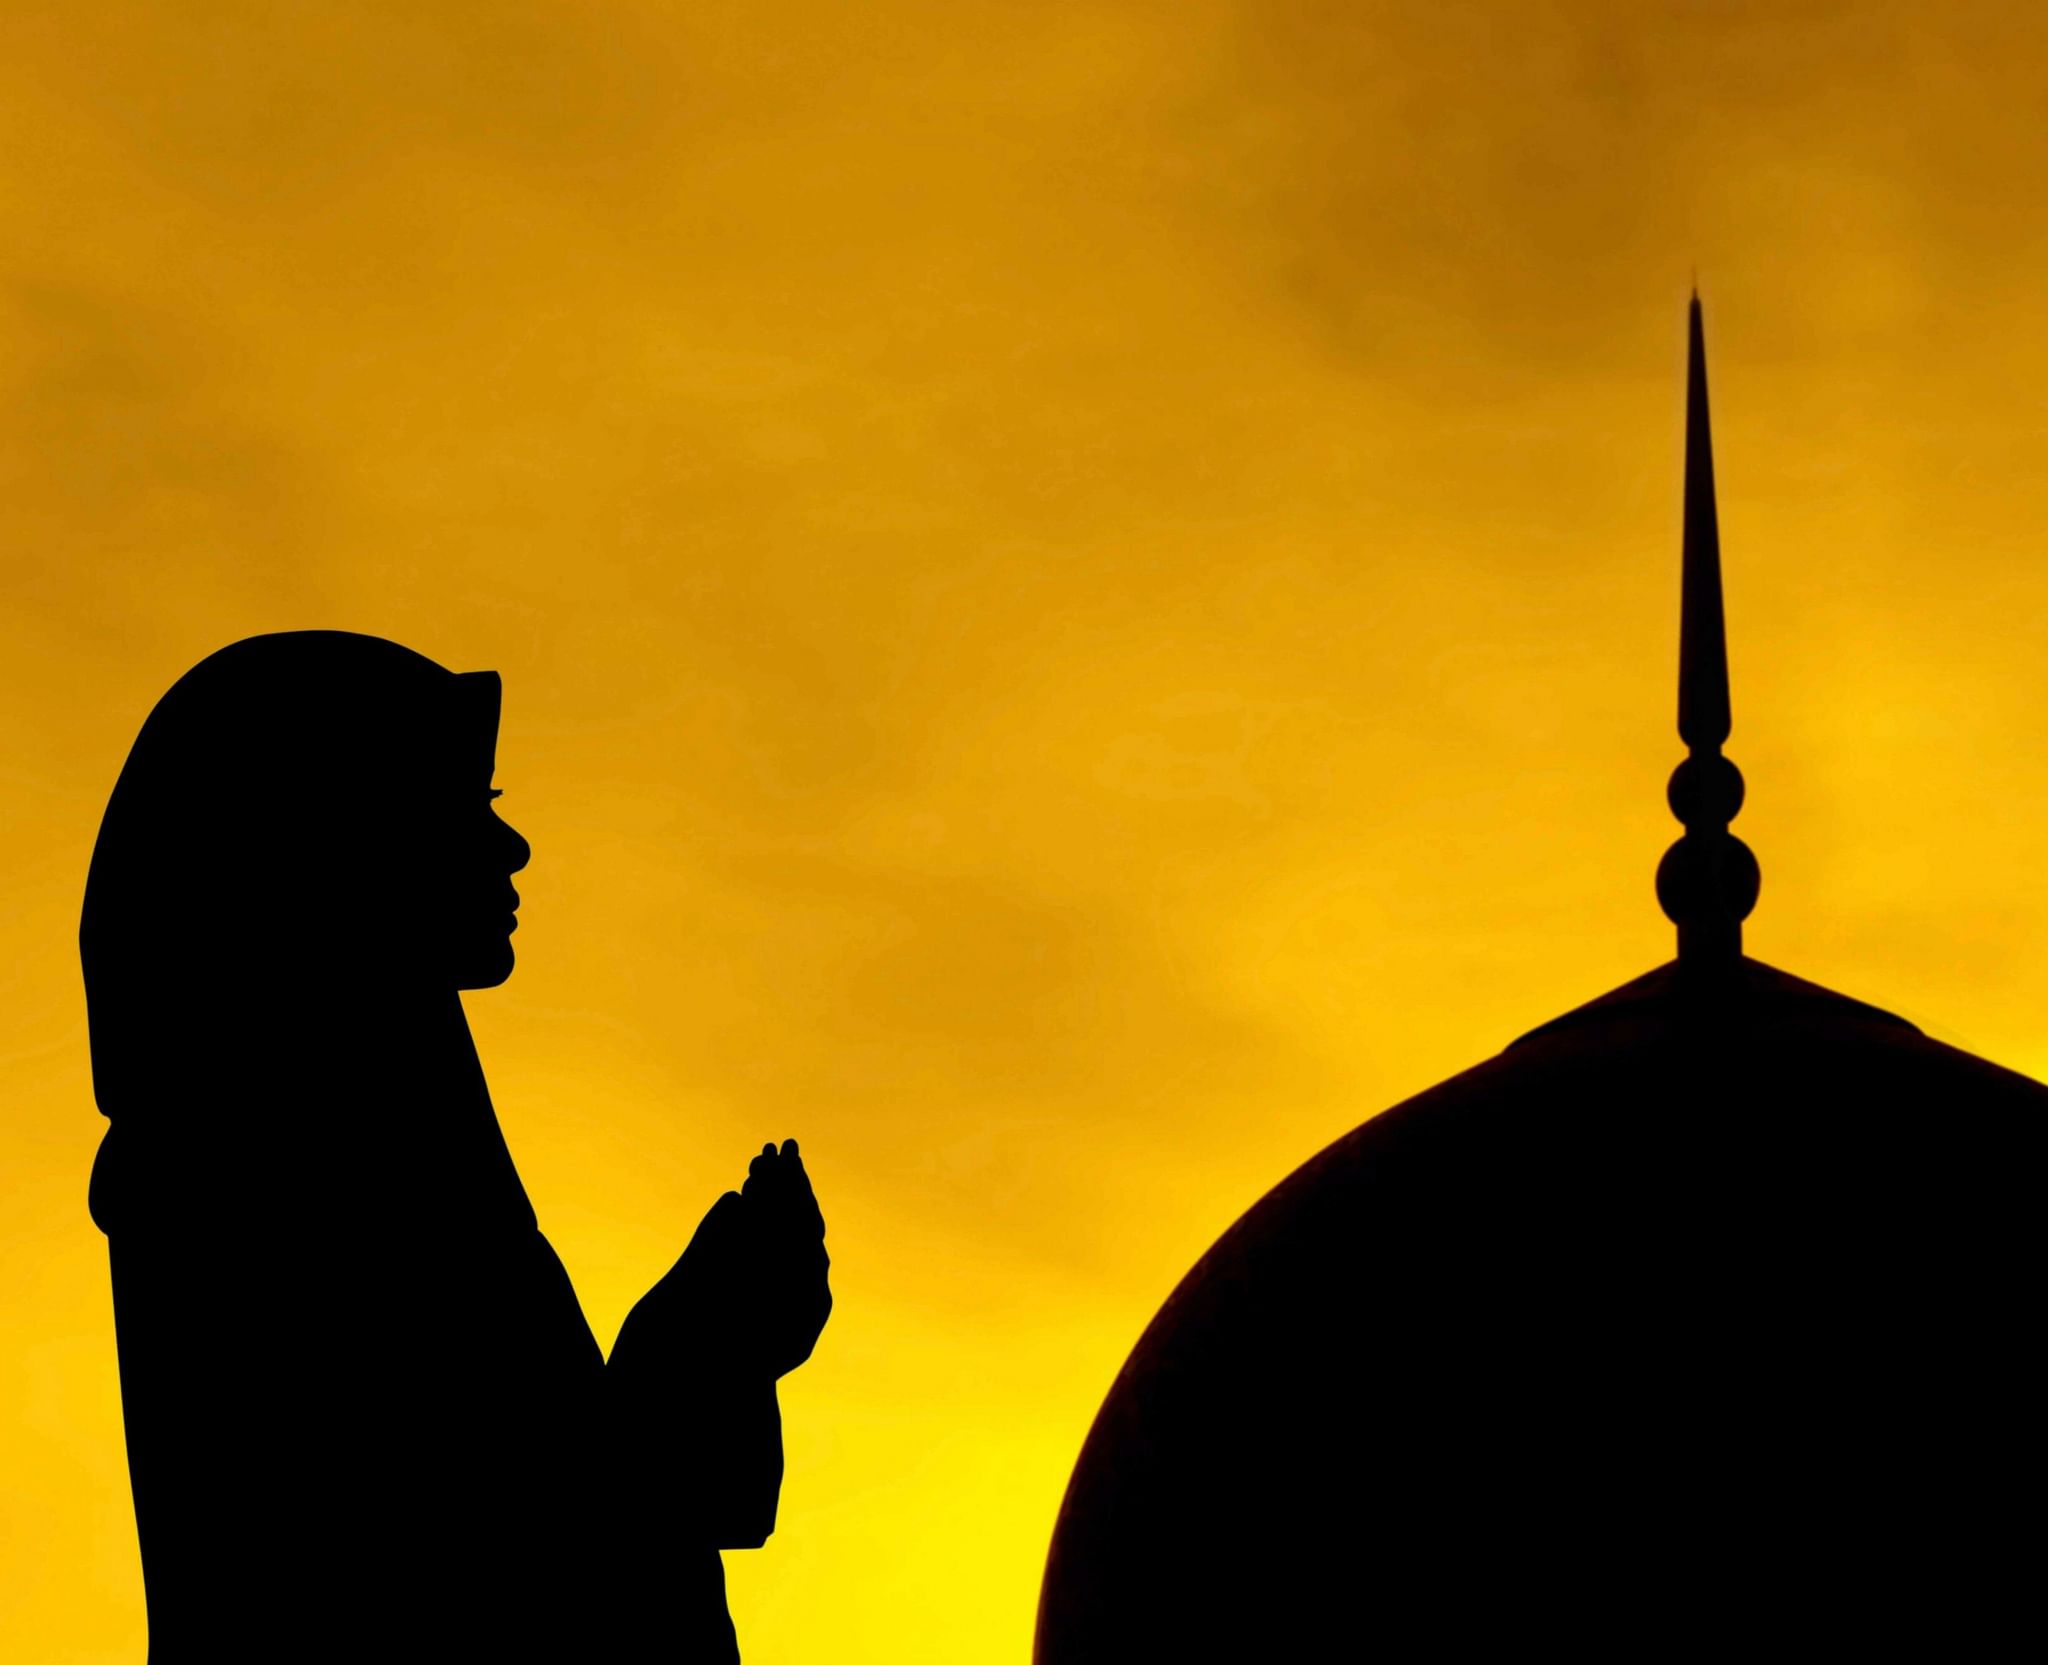 ислам религия мира и добра картинки